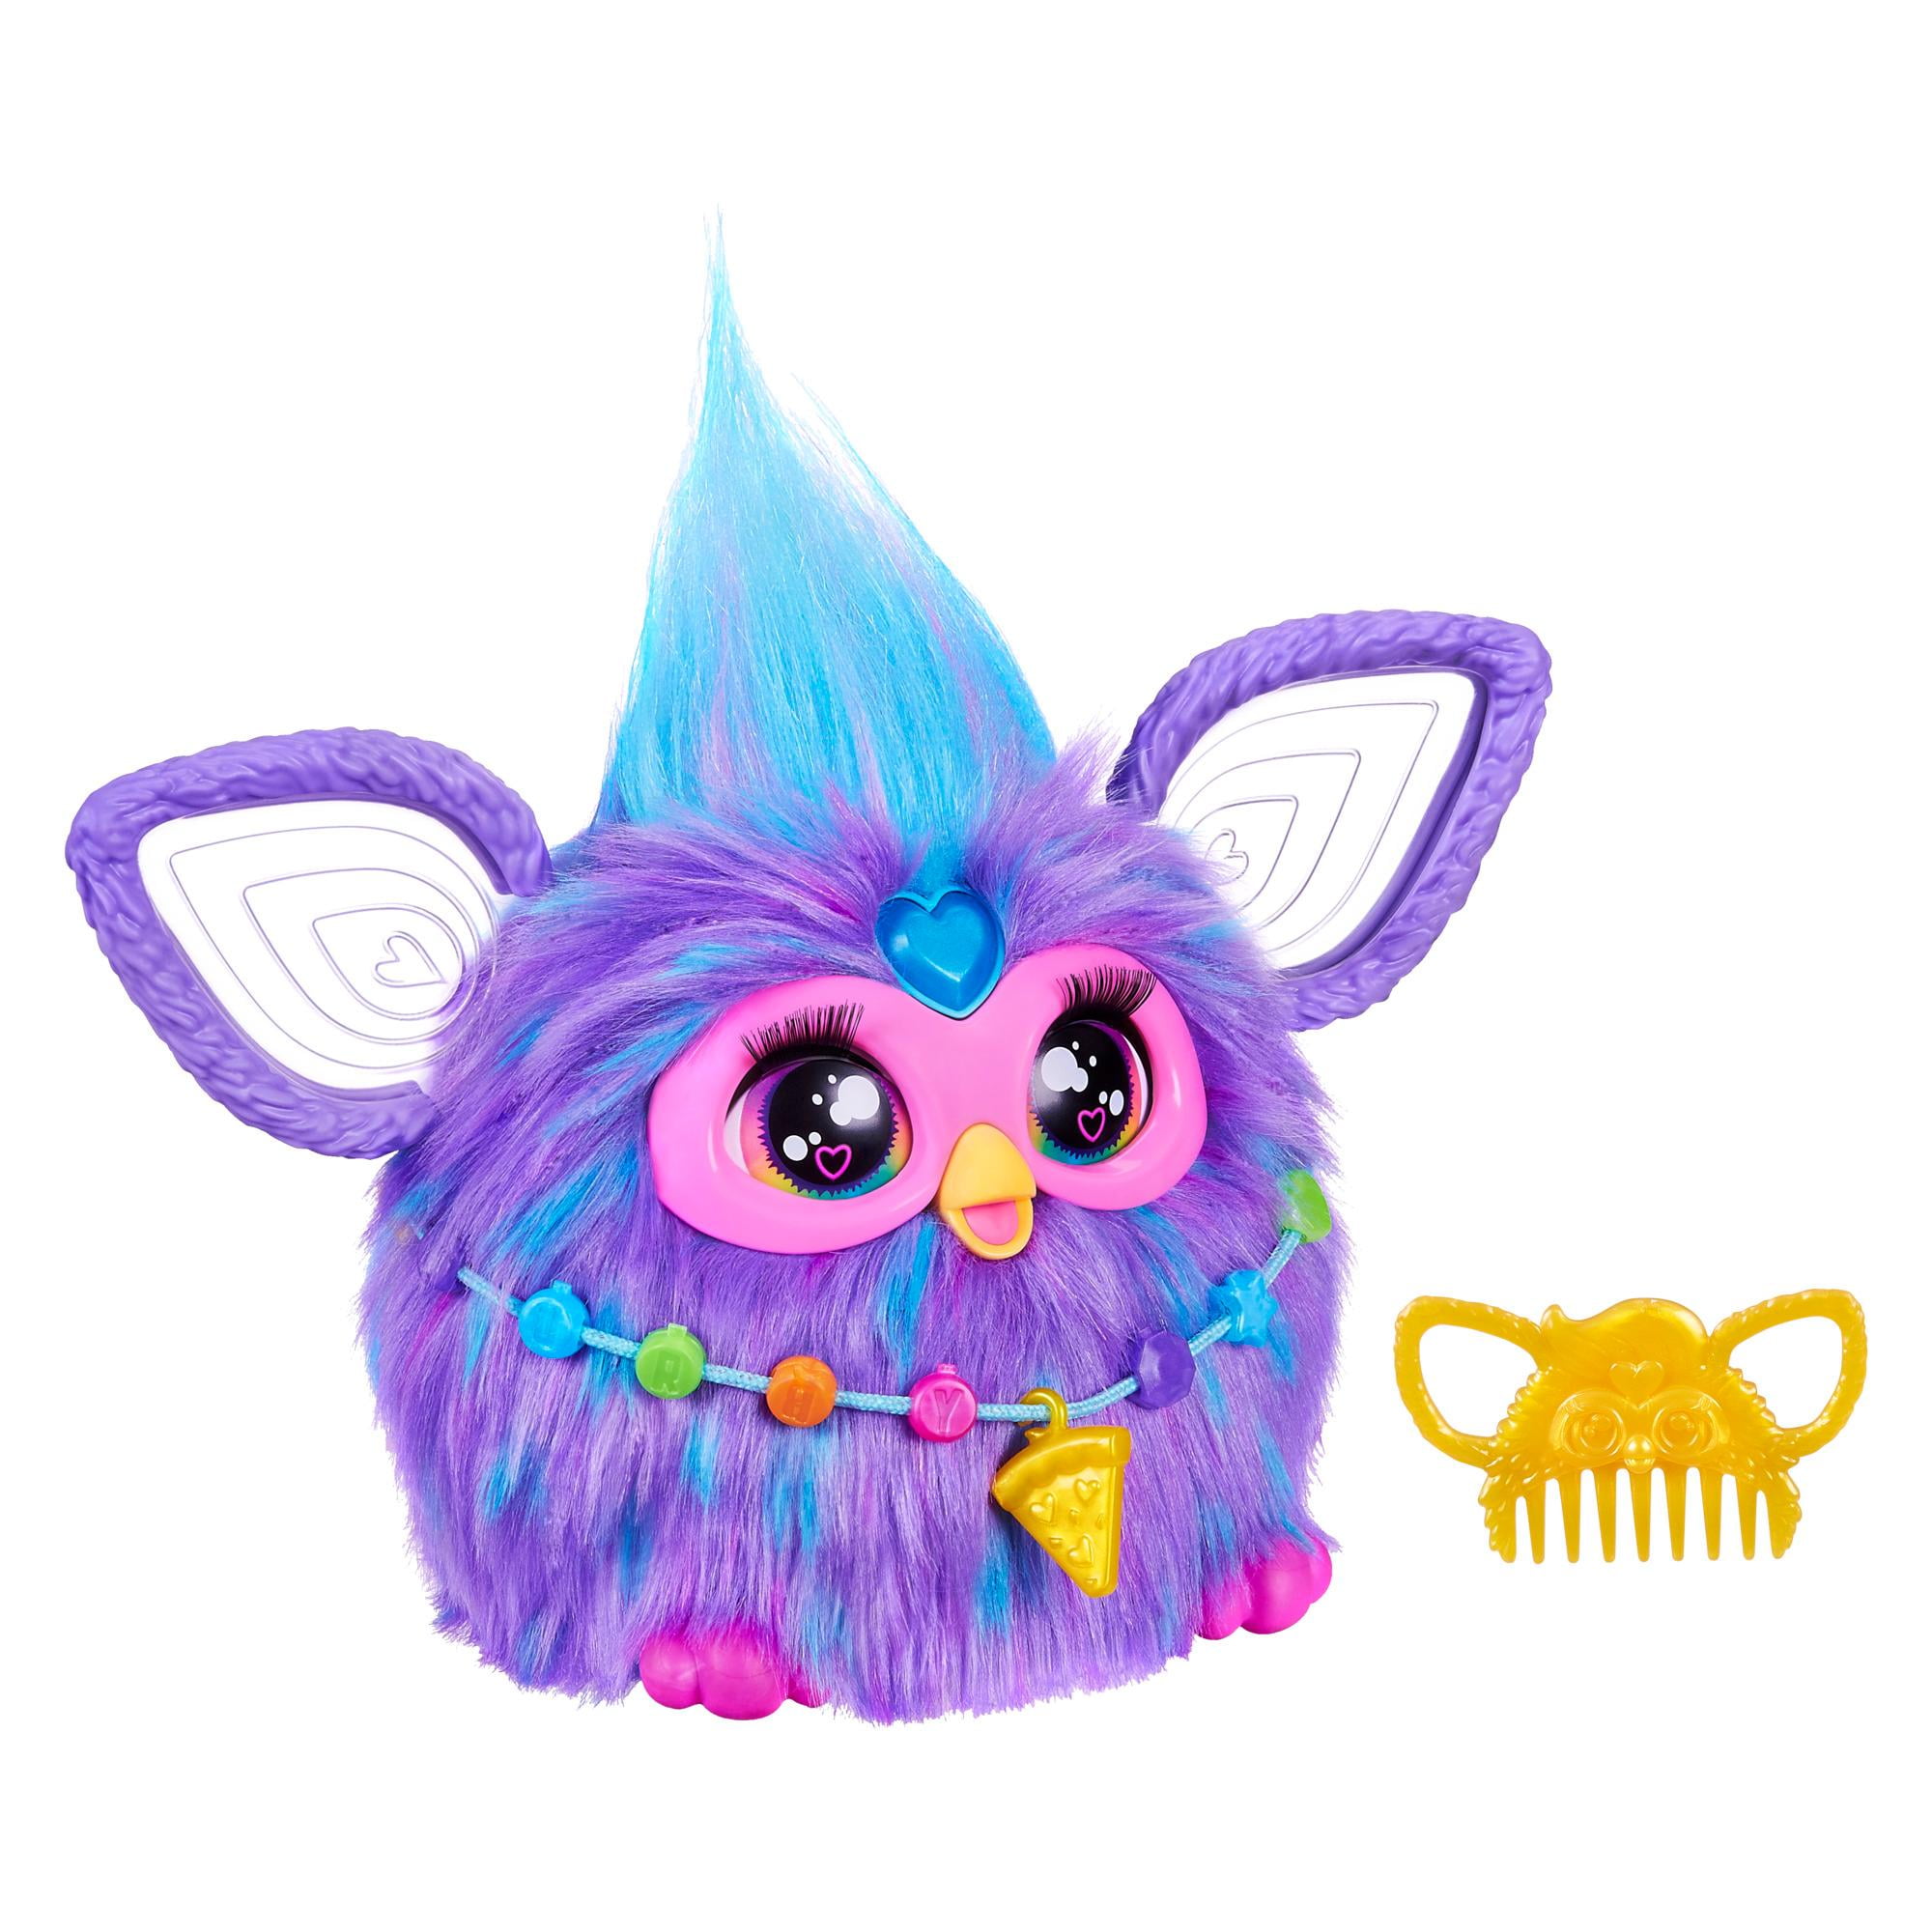 Acheter Furby Peluche interactive couleur Violet Hasbro F6743105 -  Juguetilandia